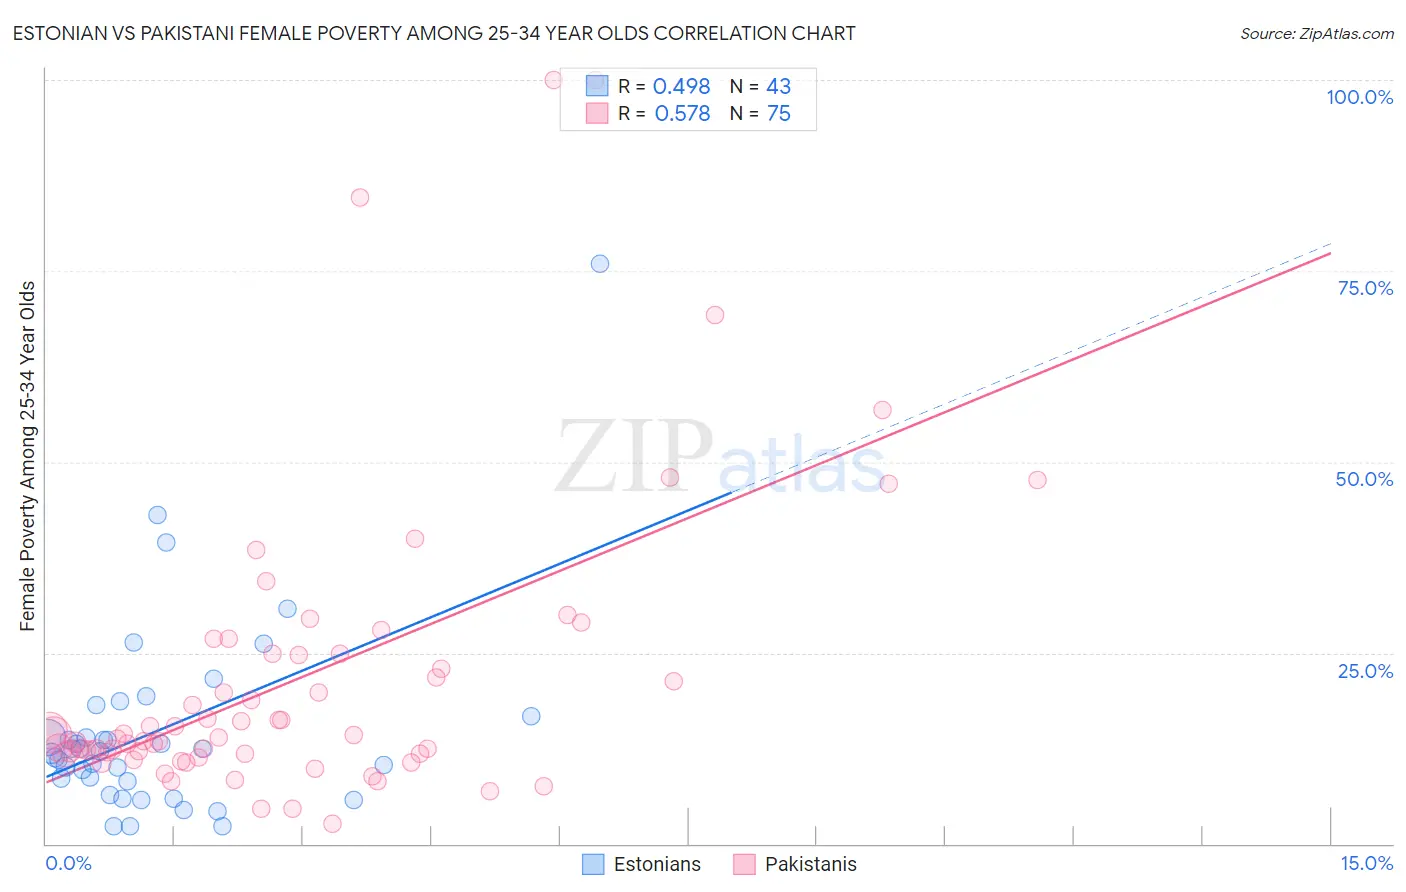 Estonian vs Pakistani Female Poverty Among 25-34 Year Olds